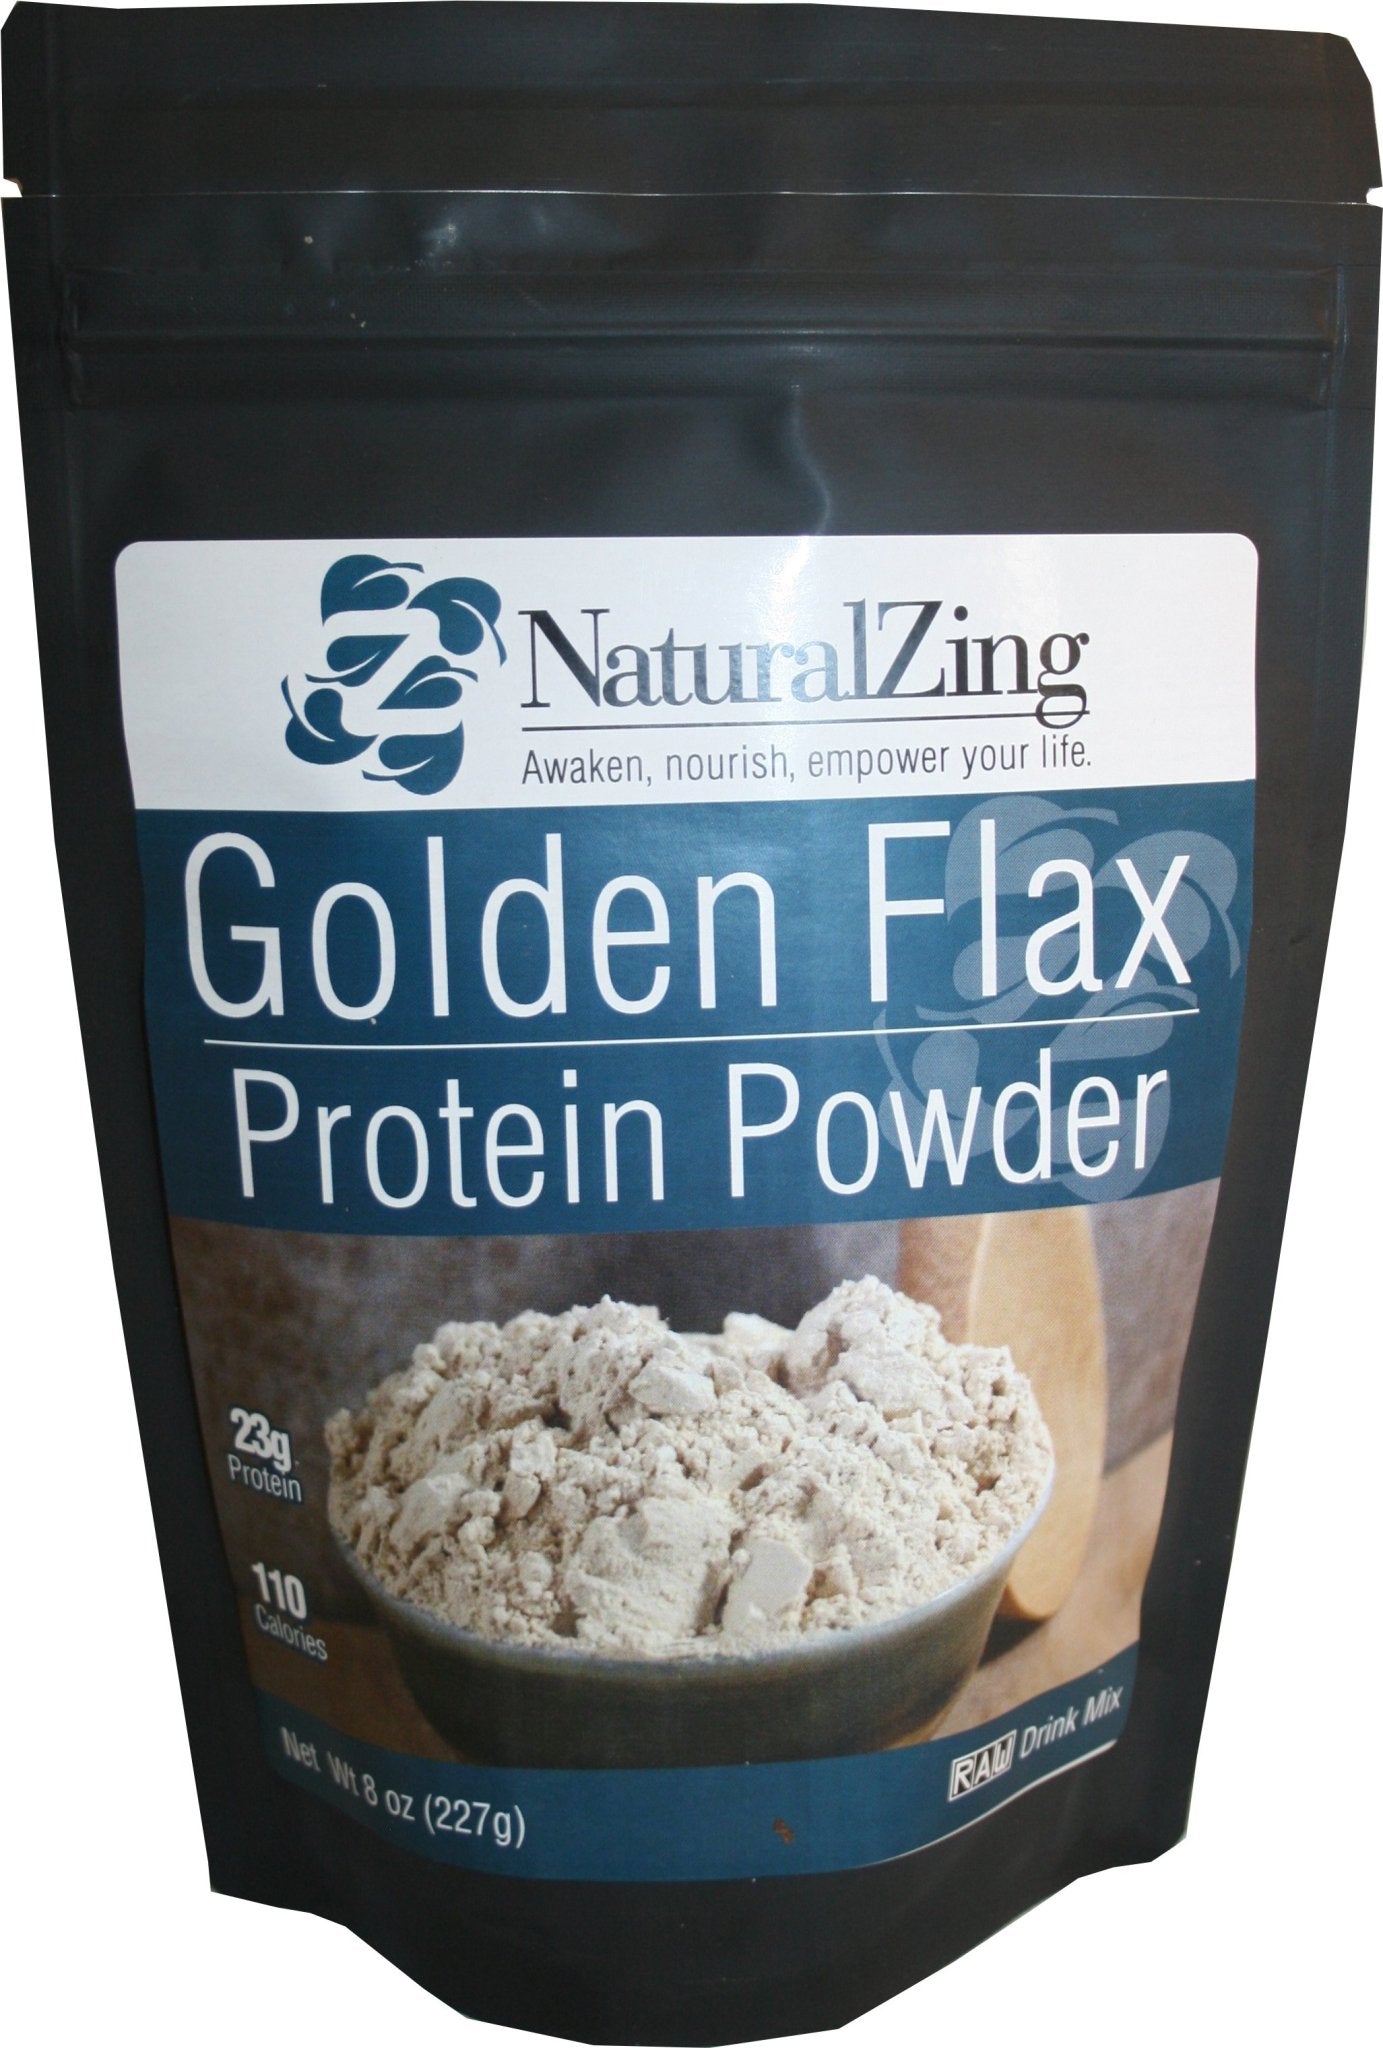 Golden Flax Protein Powder 8 oz - Natural Zing